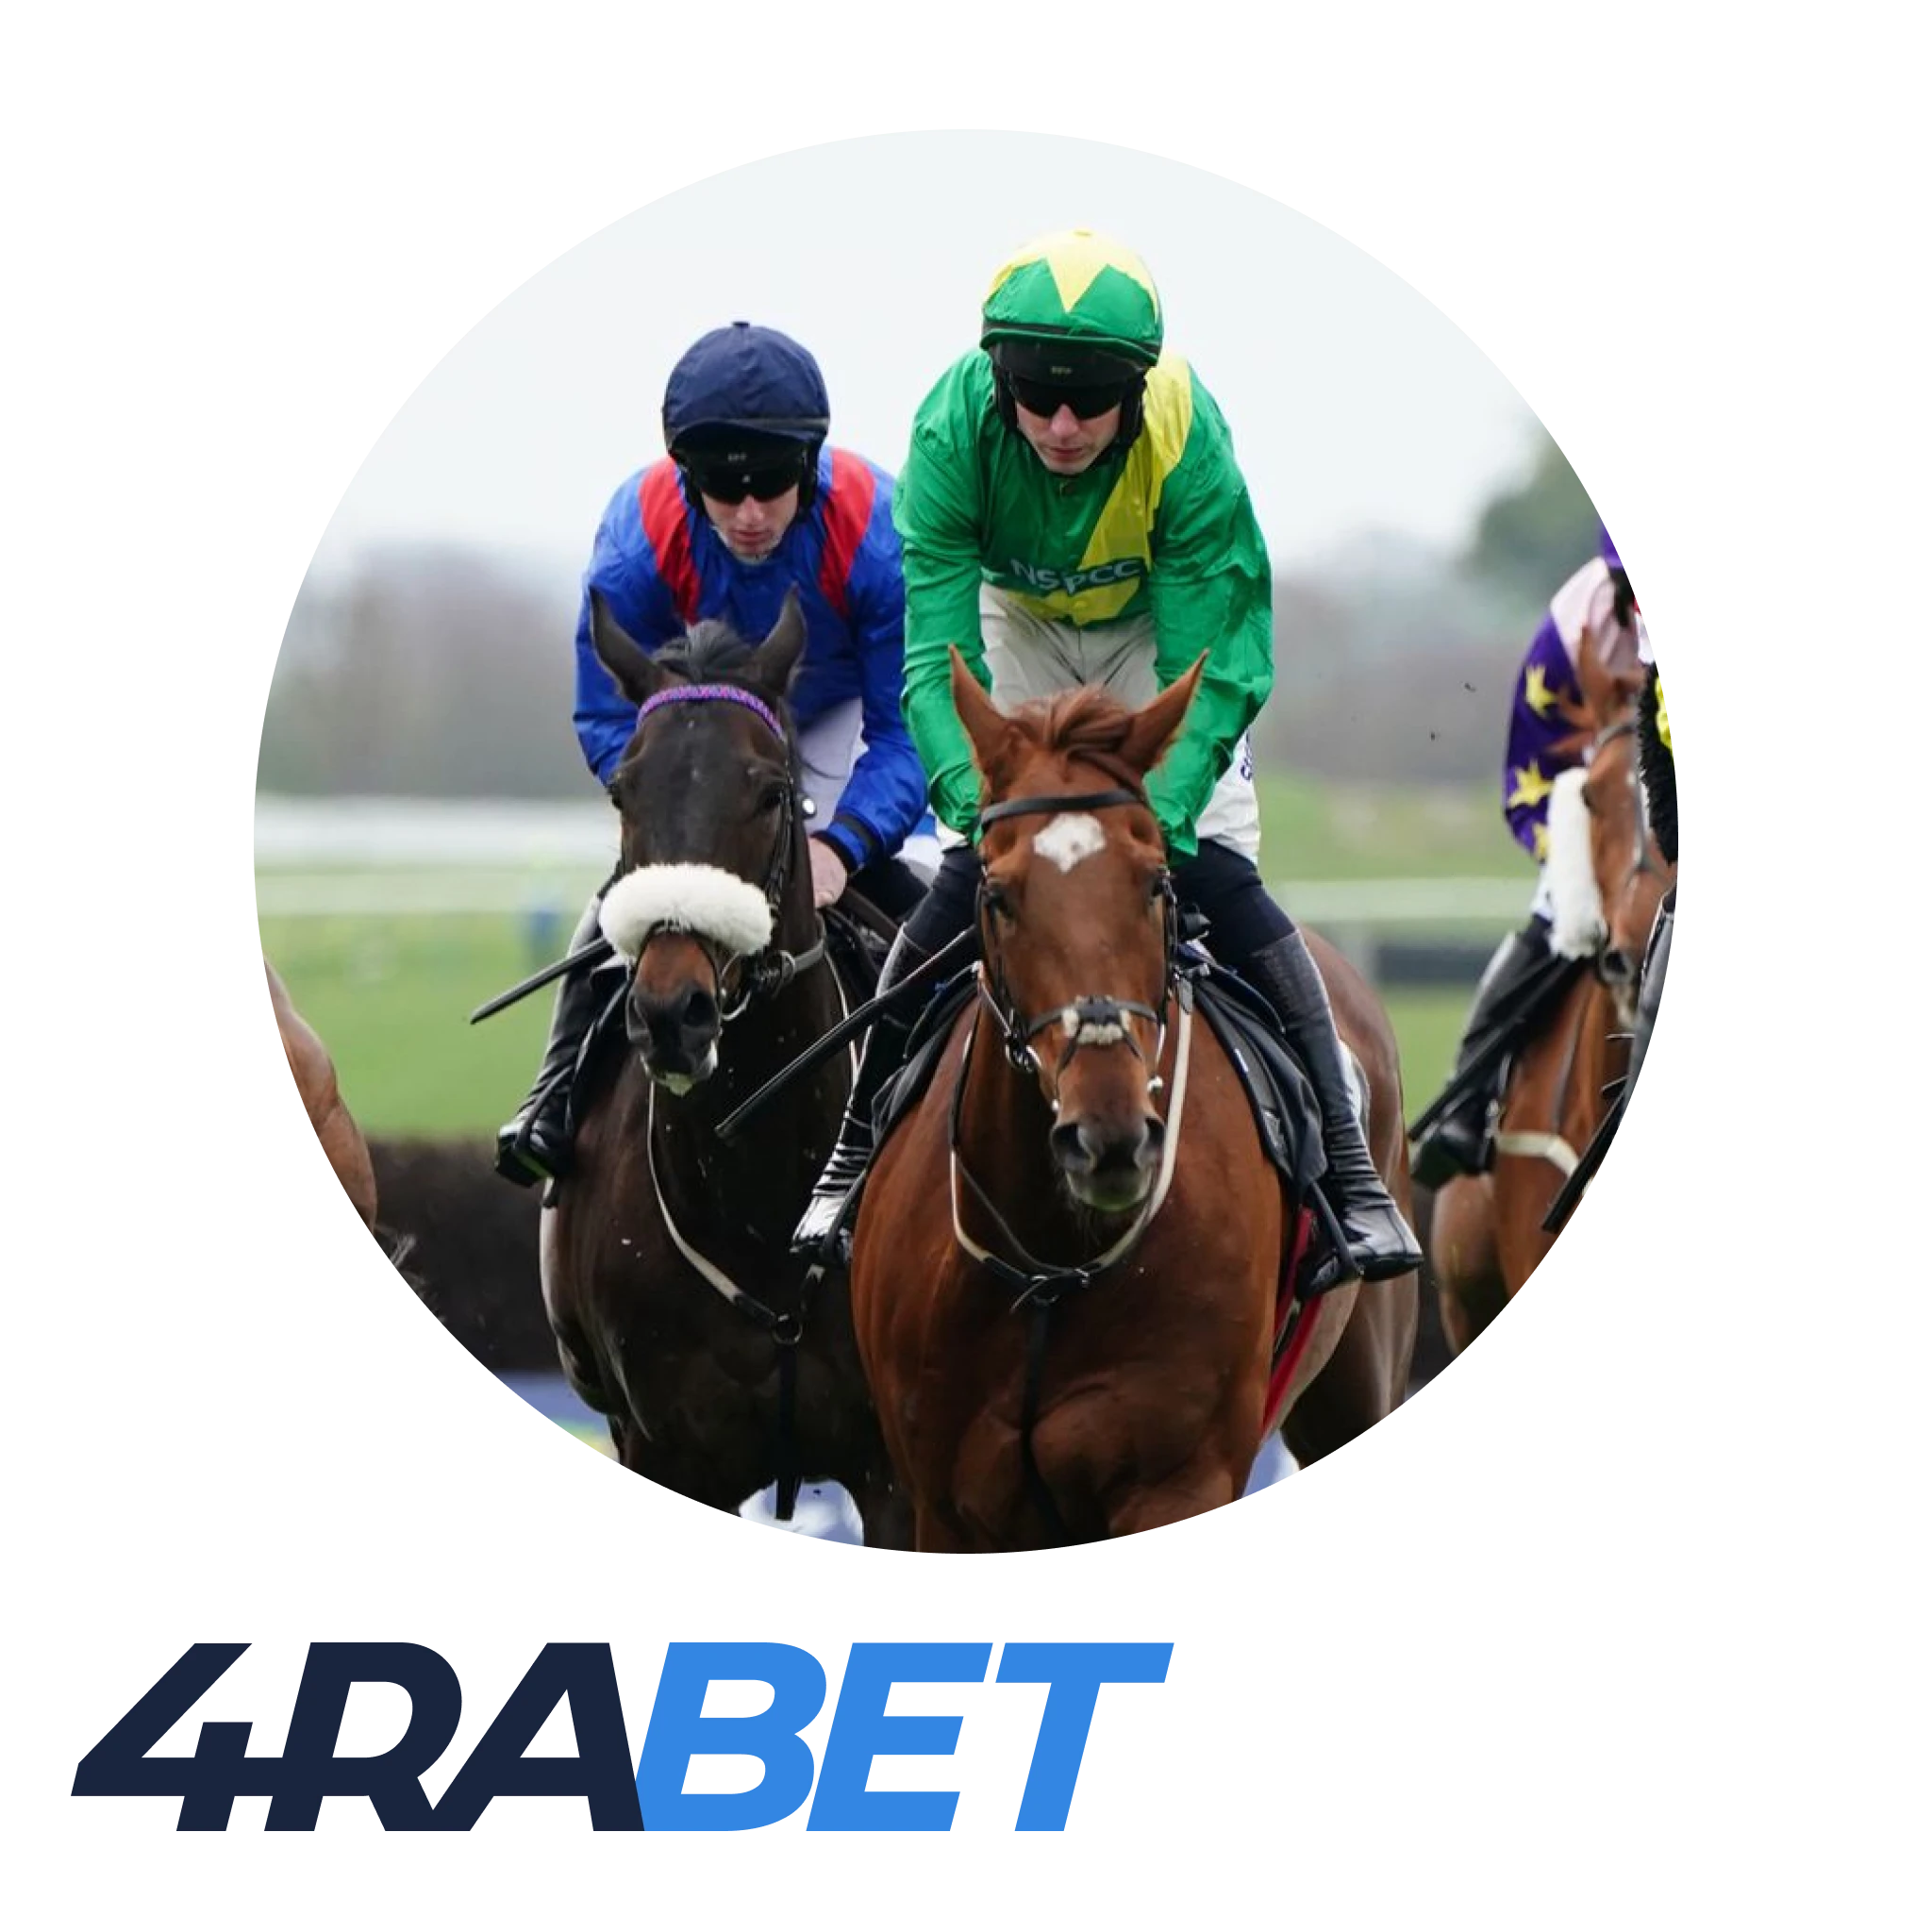 4rabet offers a comprehensive platform for horse racing fans.